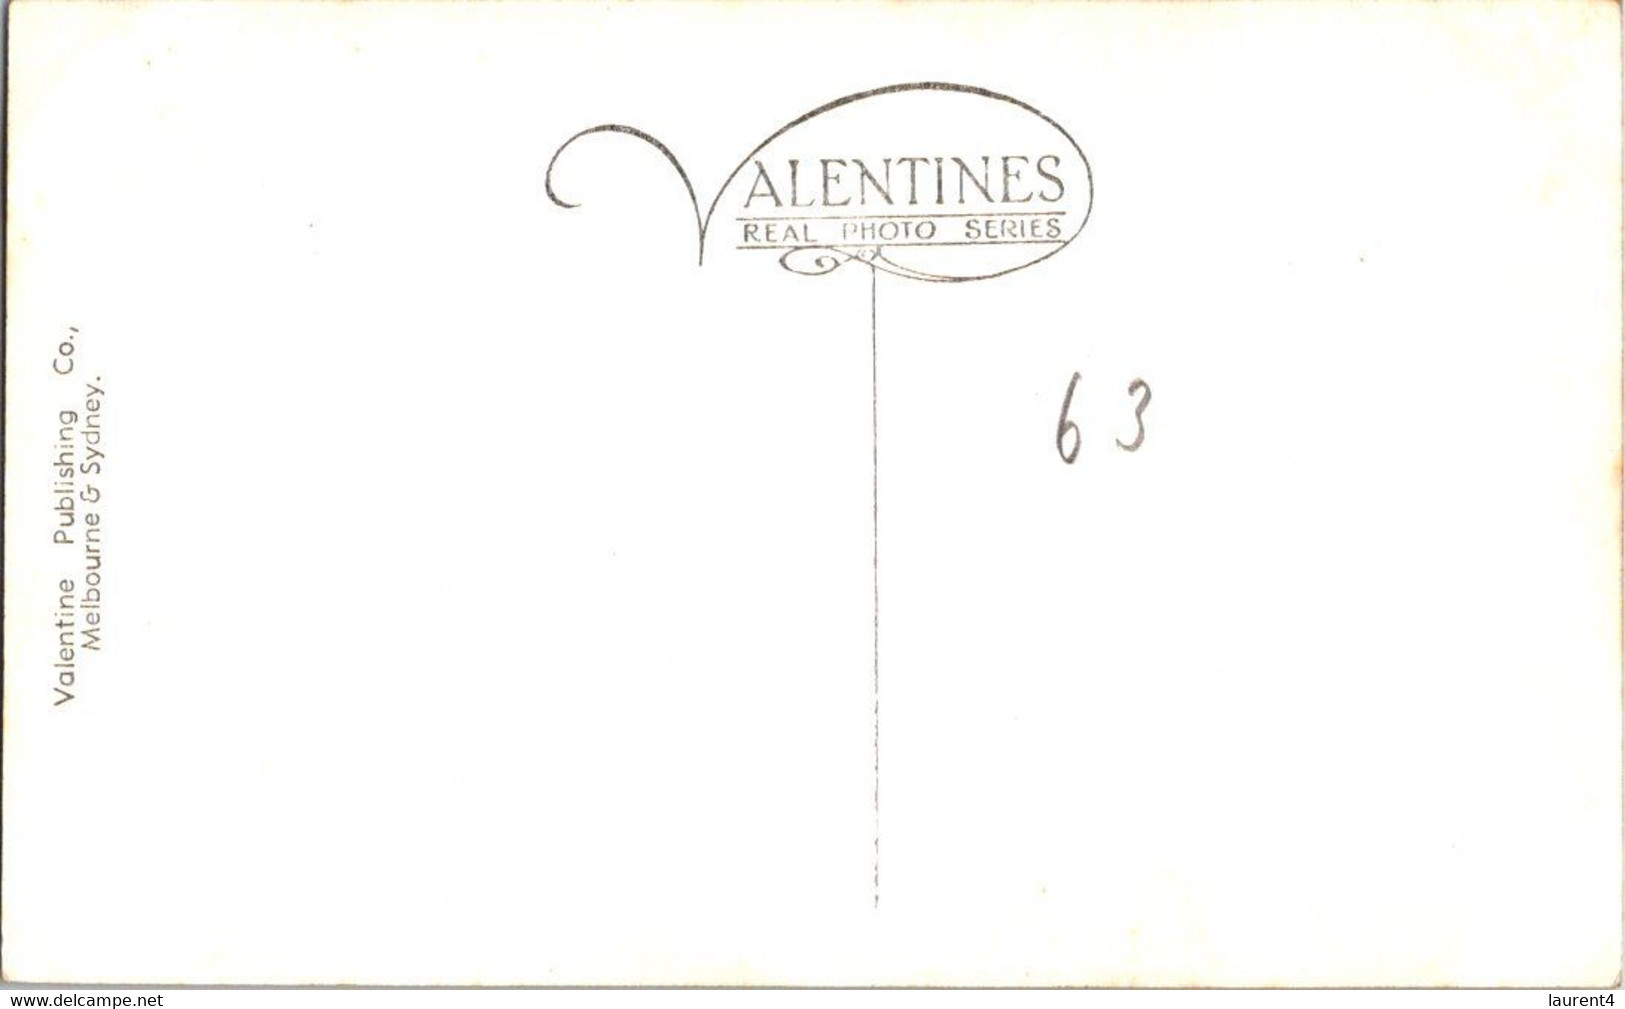 (4 M 26 A) VERY OLD - B/w  - Australia - Valentine Series Nº1021 - VIC - The Pinaccle Grampians - Grampians